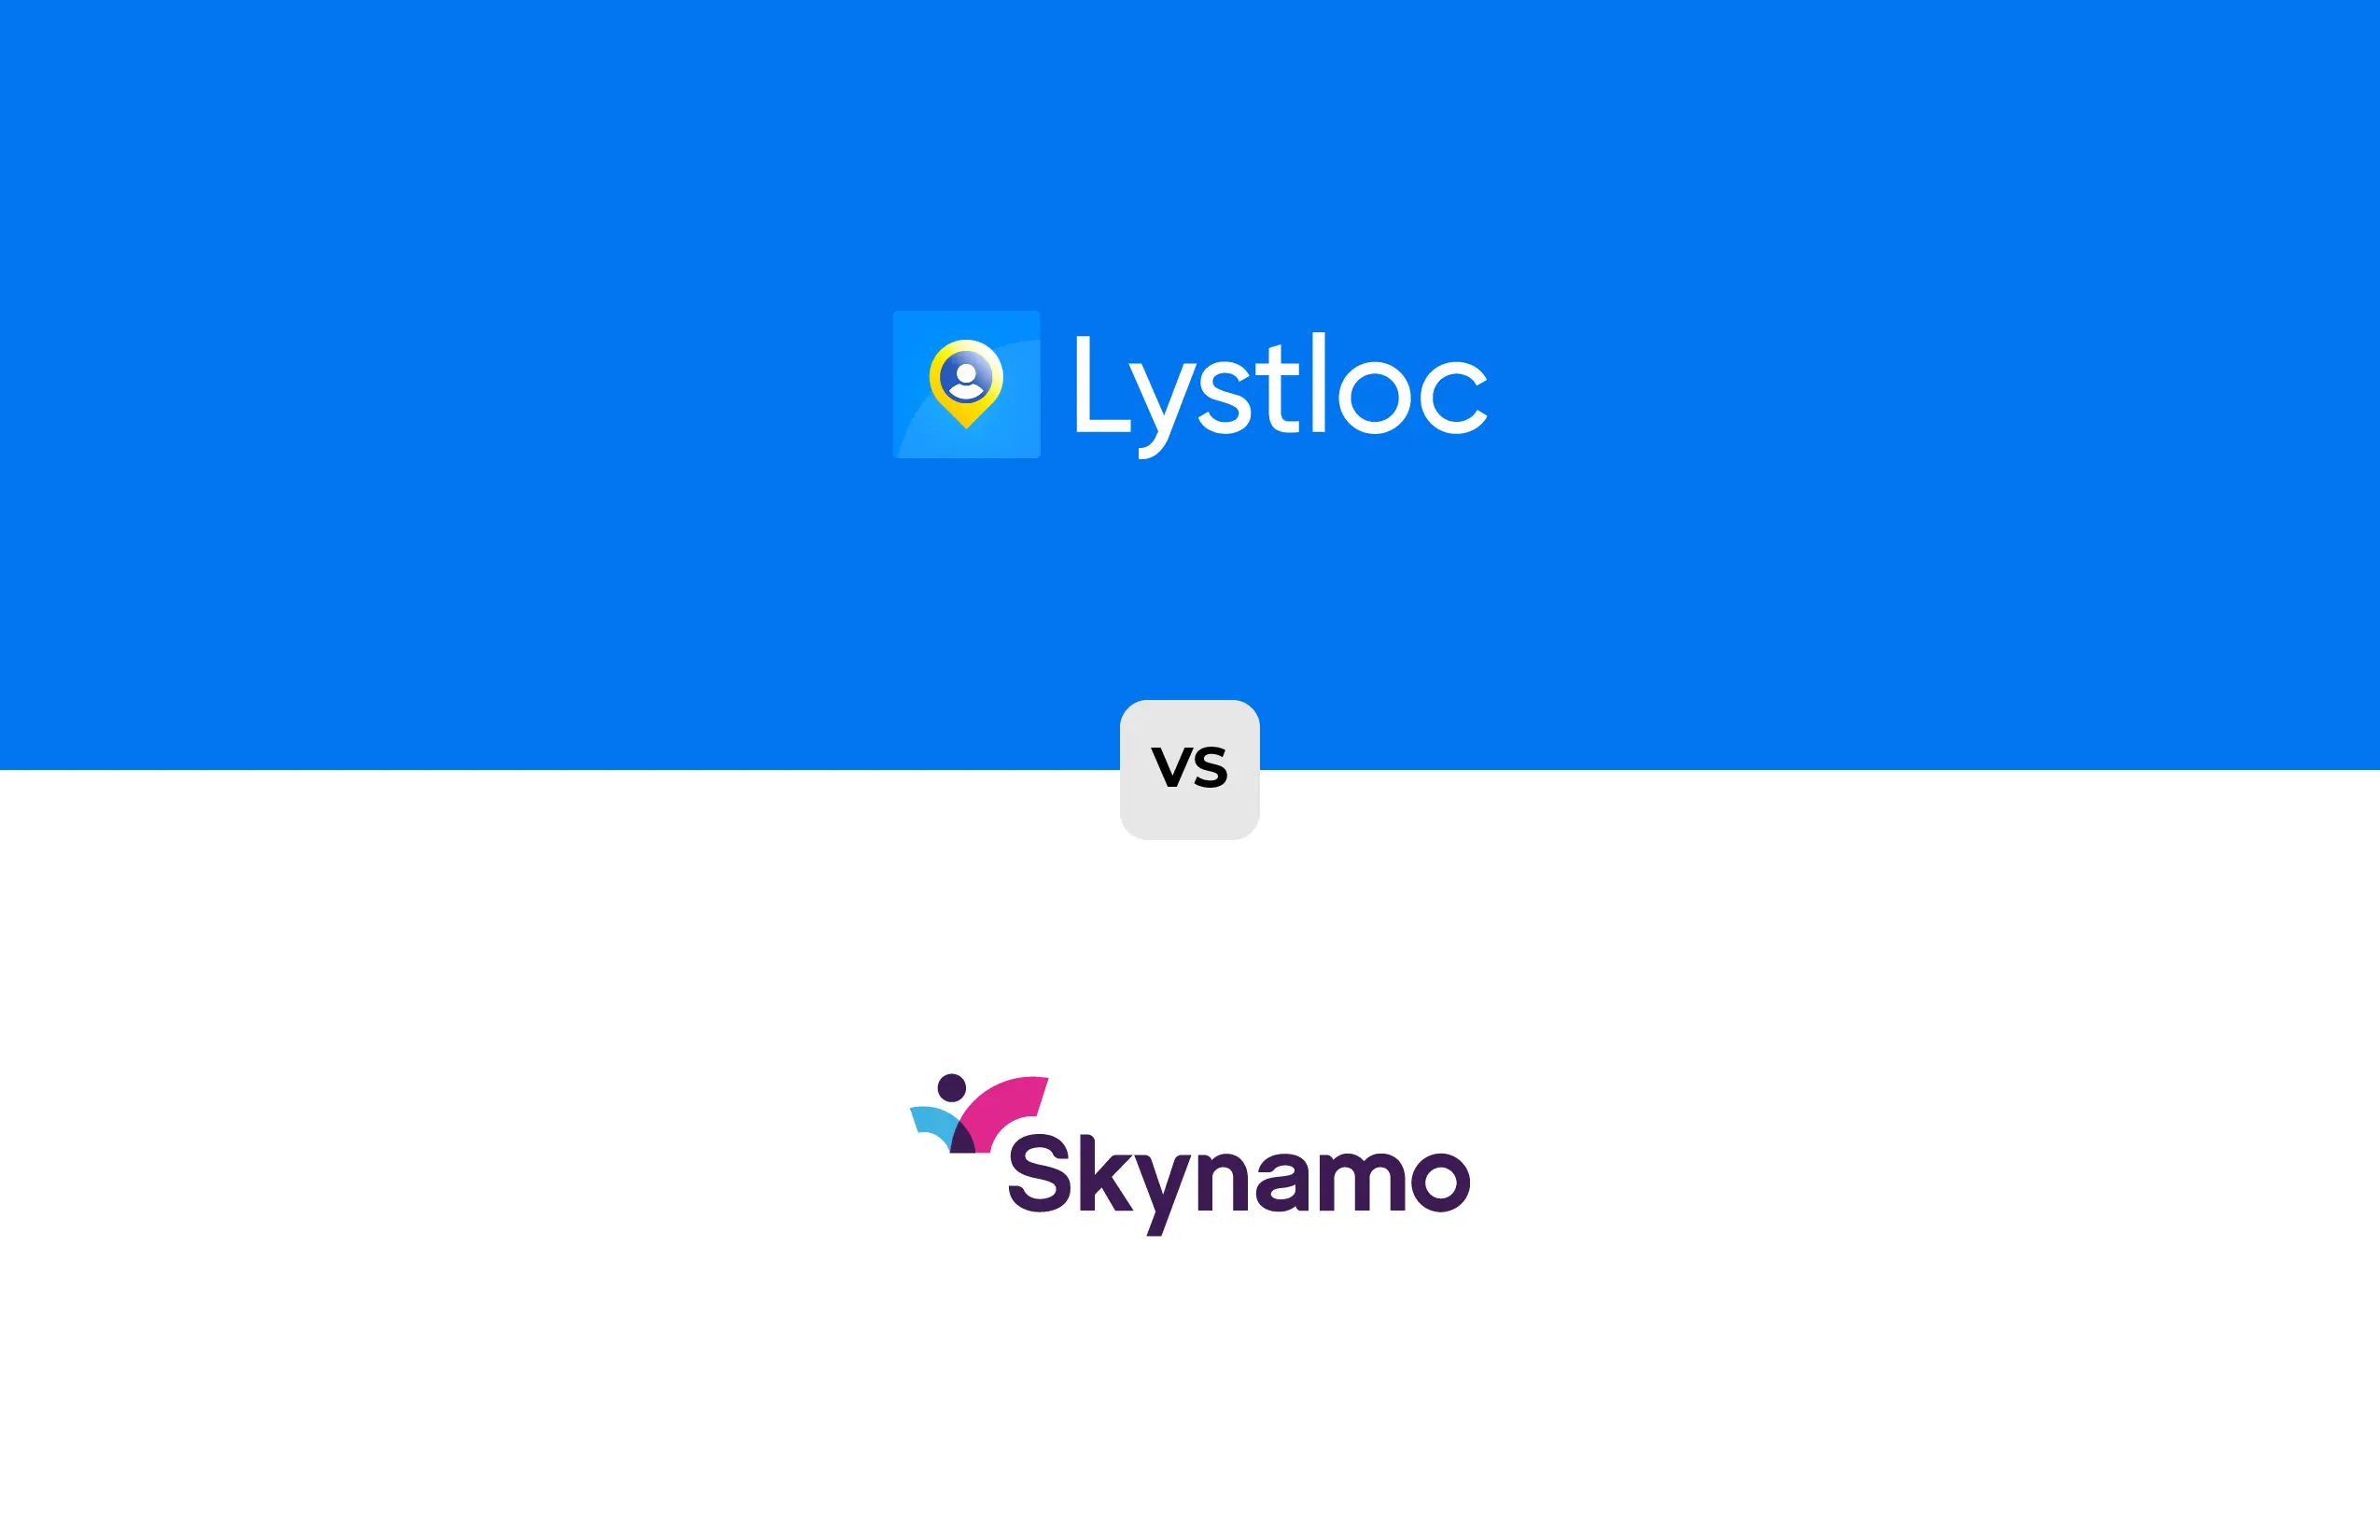 Lystloc vs Skynamo